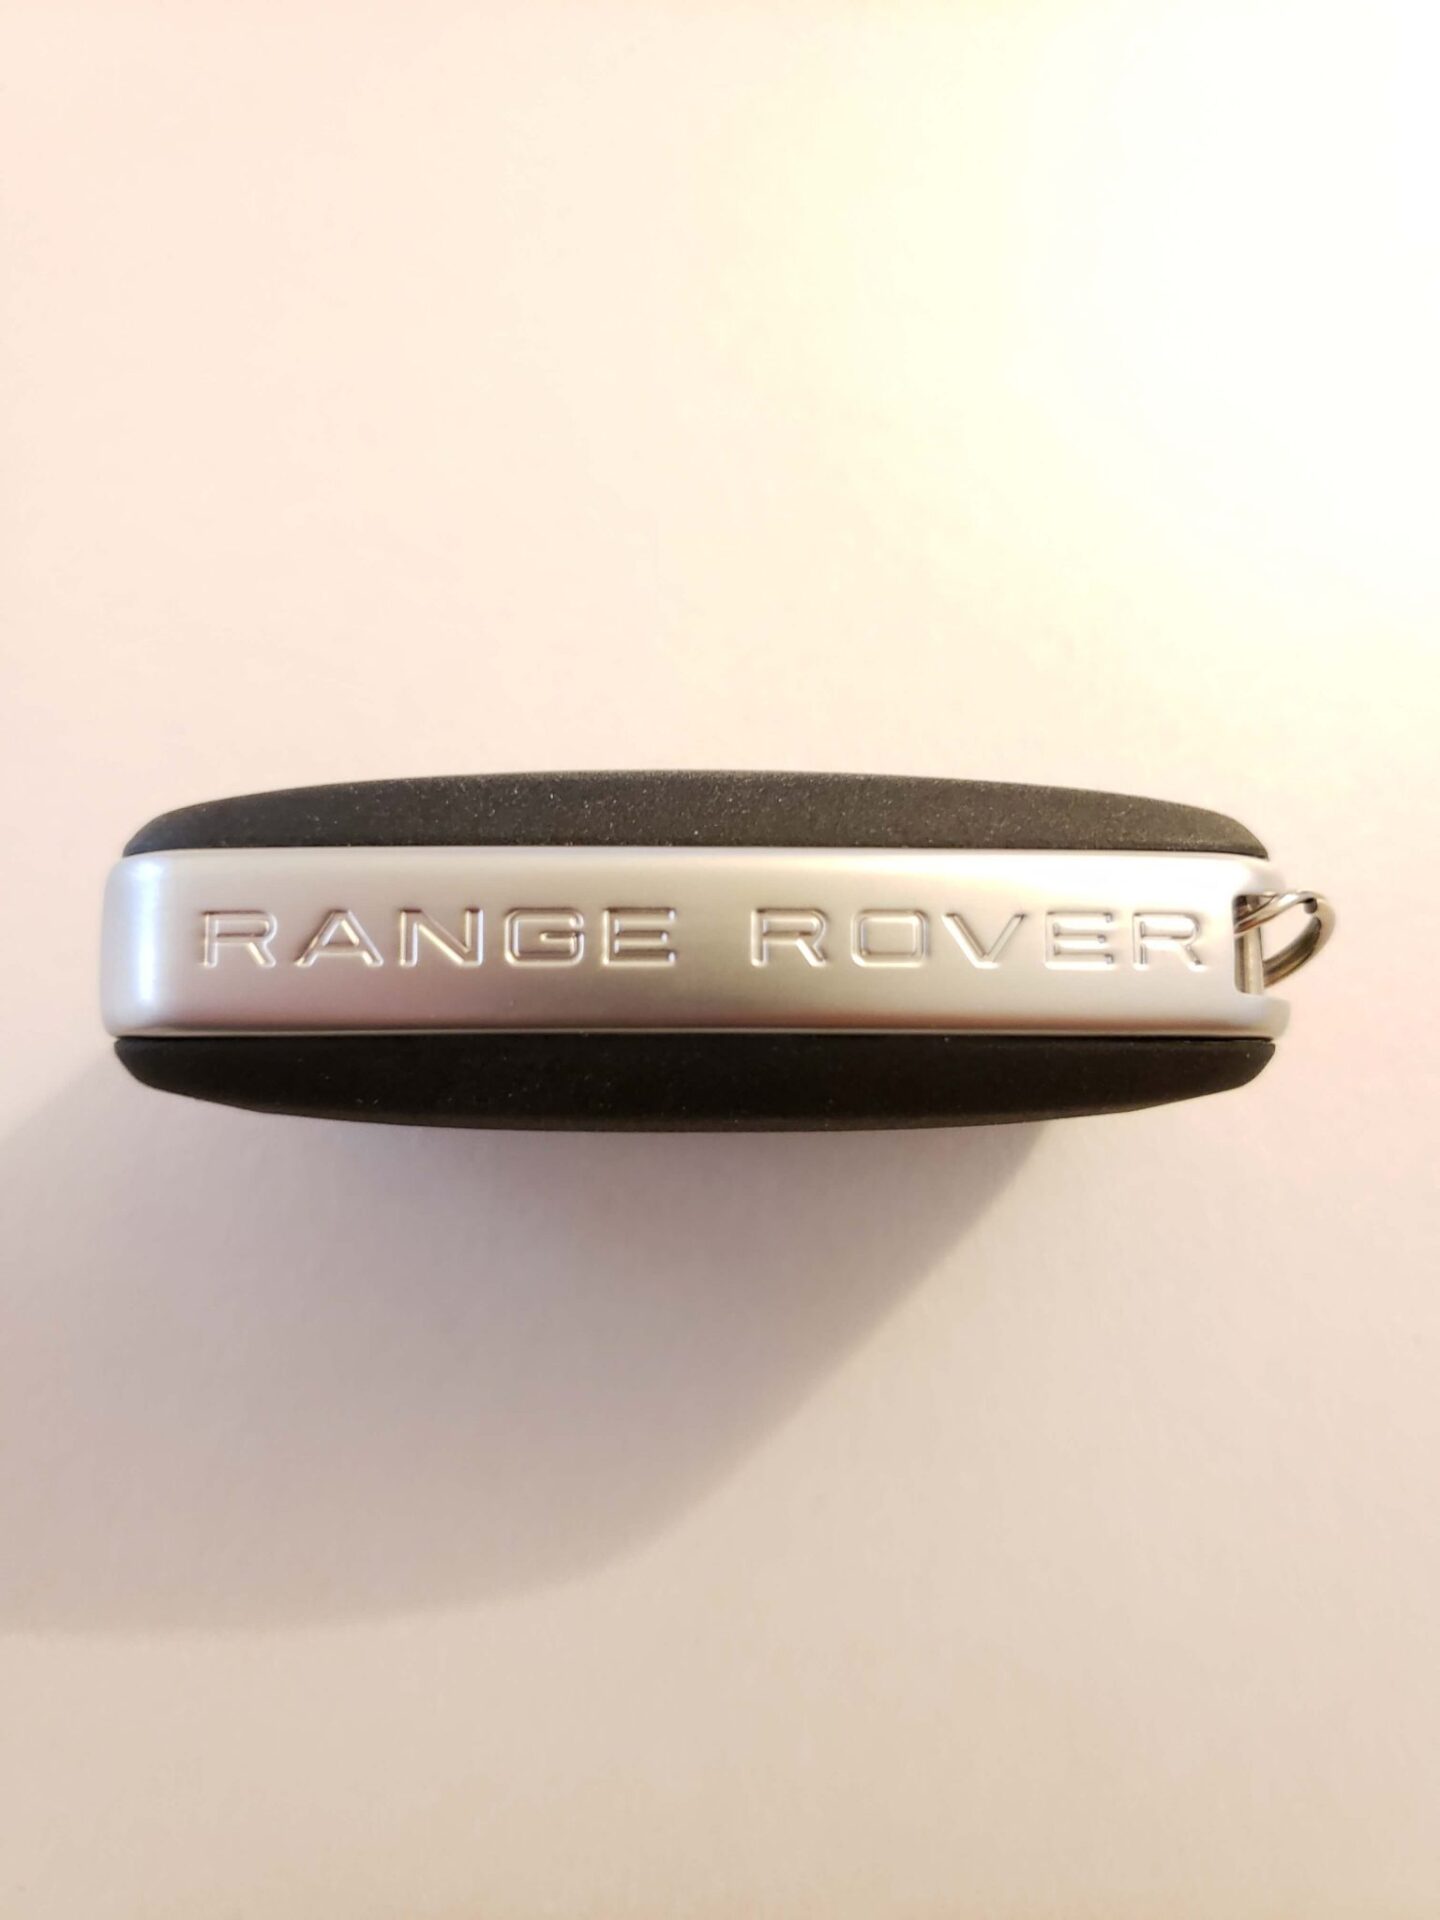 news rover 32 registration key crack